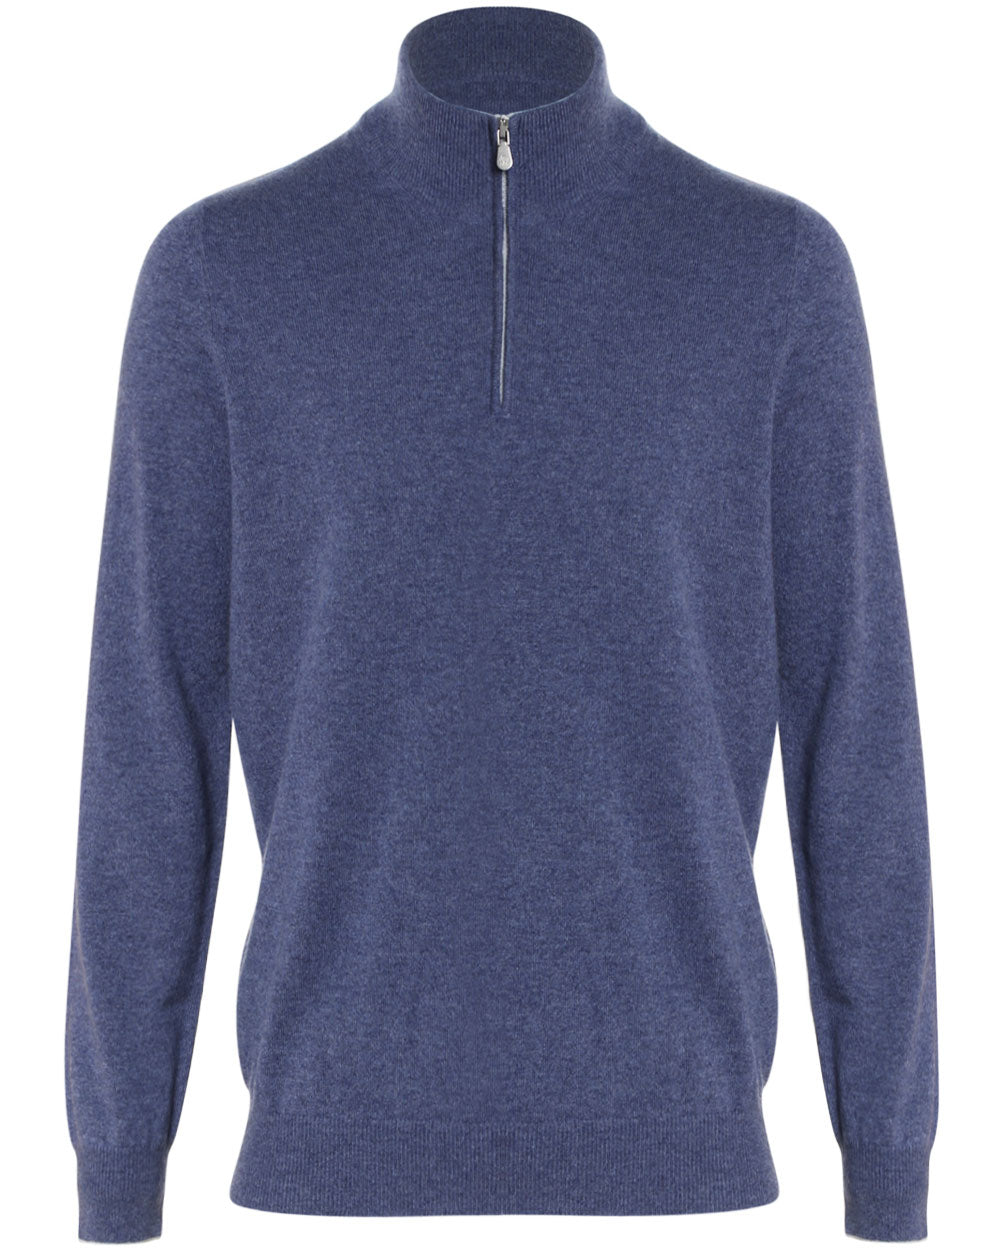 Azzurro Cashmere Quarter Zip Sweater